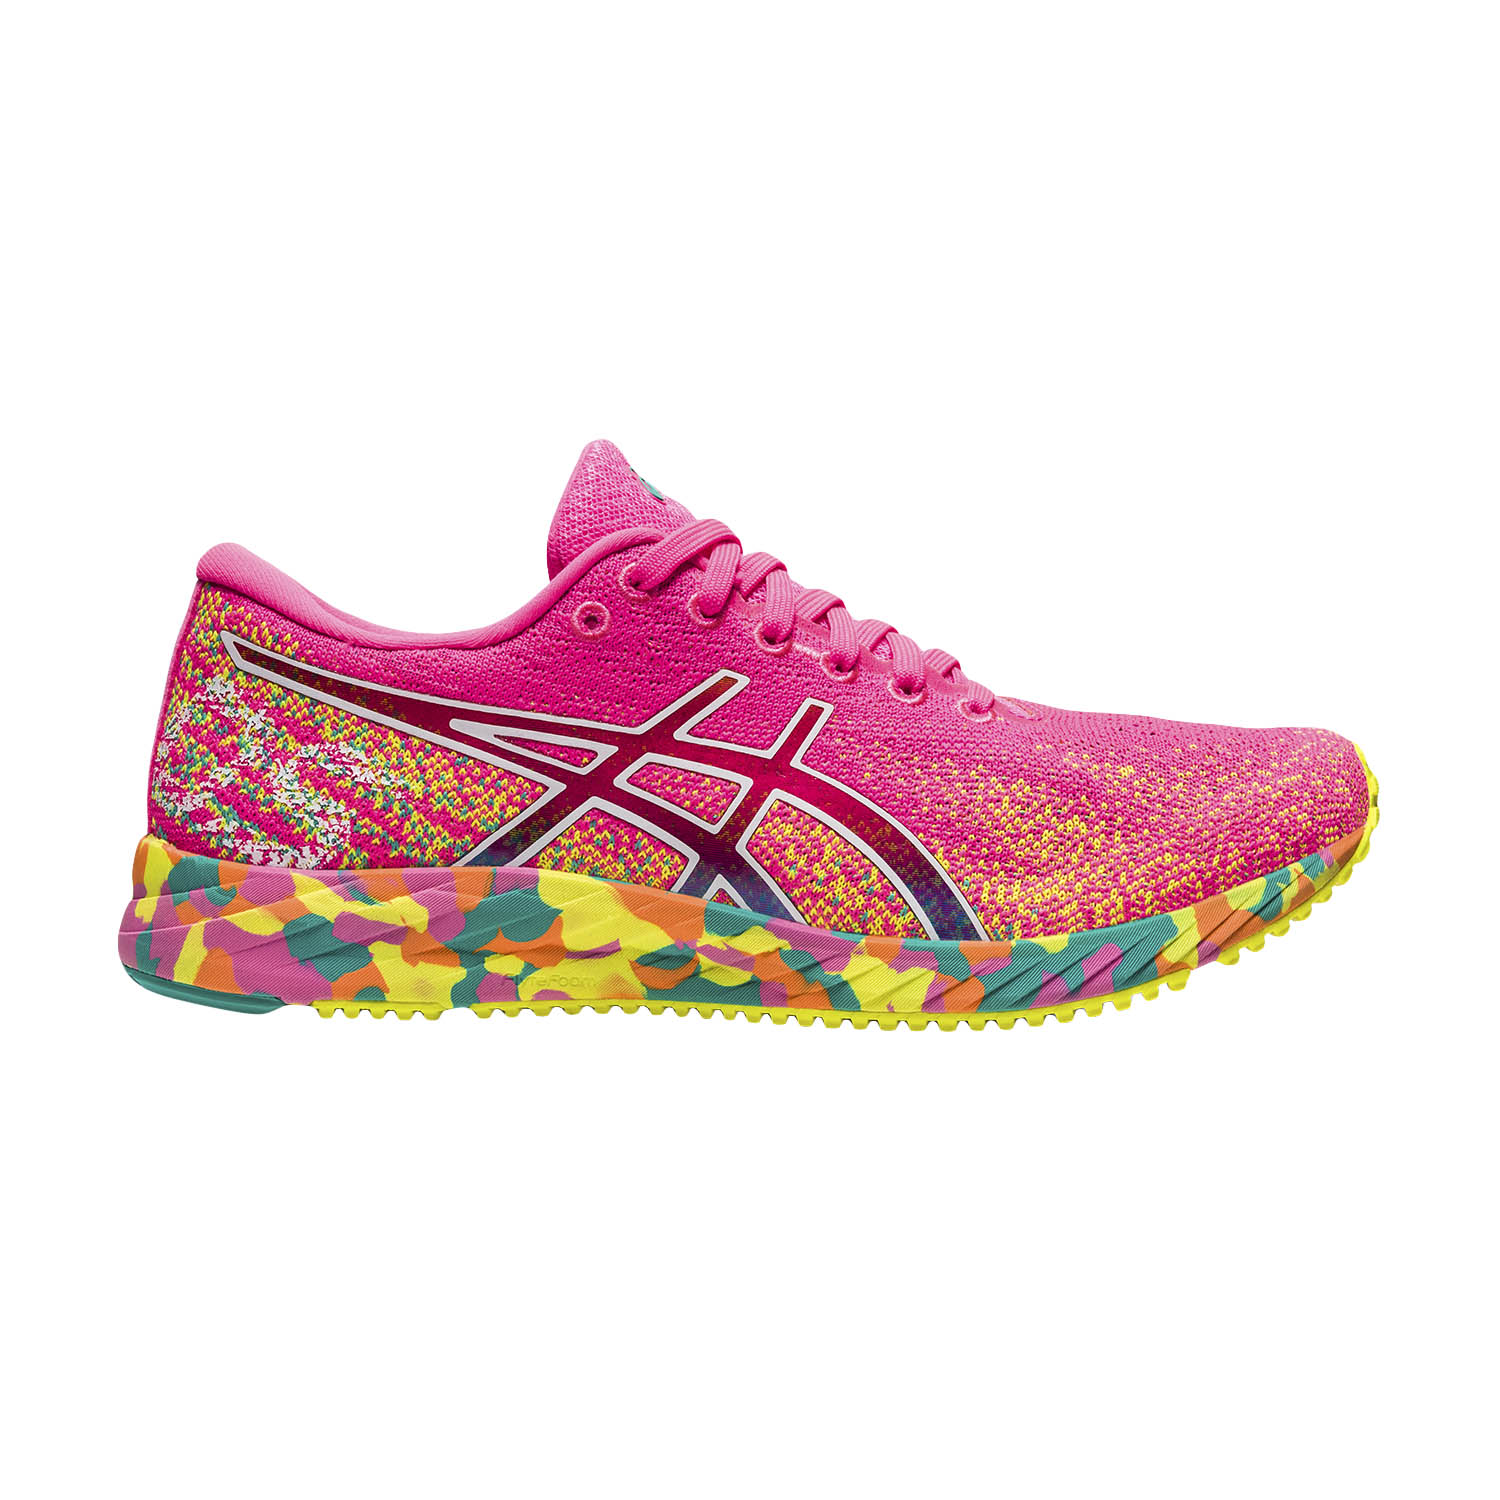 Asics Gel Ds Trainer 26 Women S Running Shoes Hot Pink